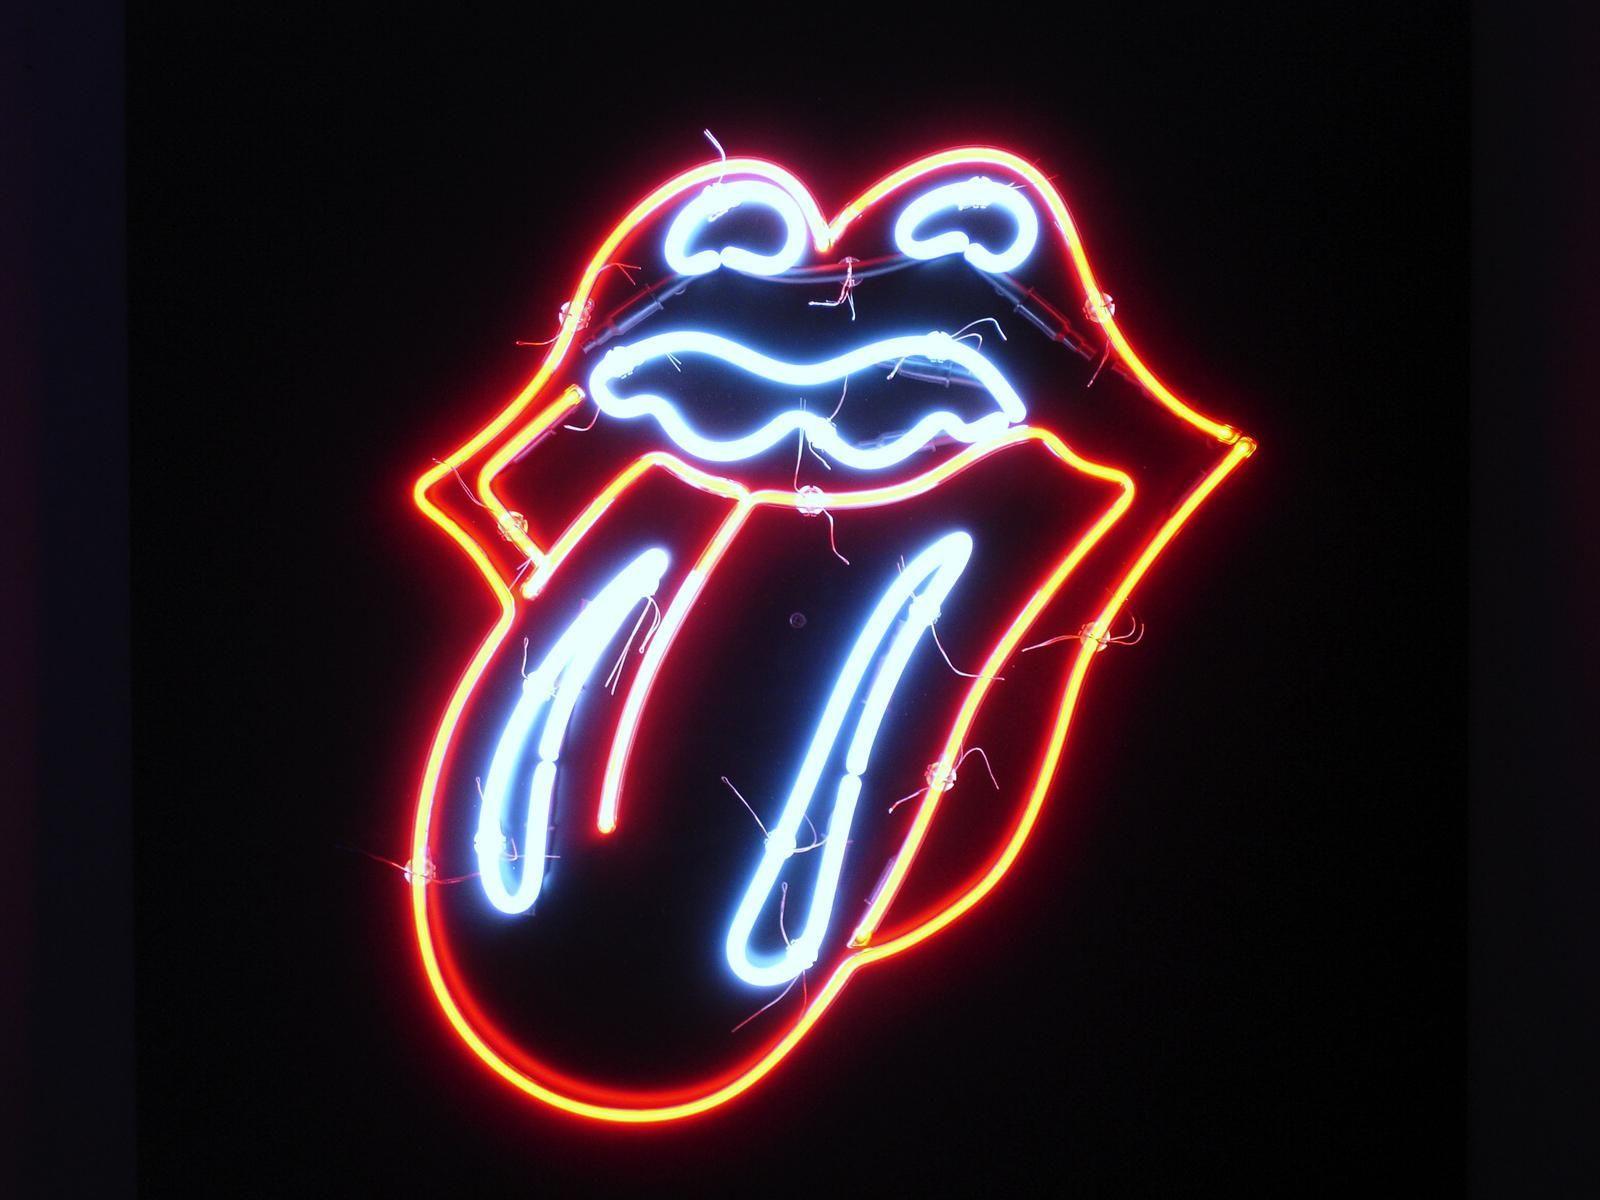 Rolling Stones Tongue iPhone Wallpaper HD Wallpaper 1600x1200 px